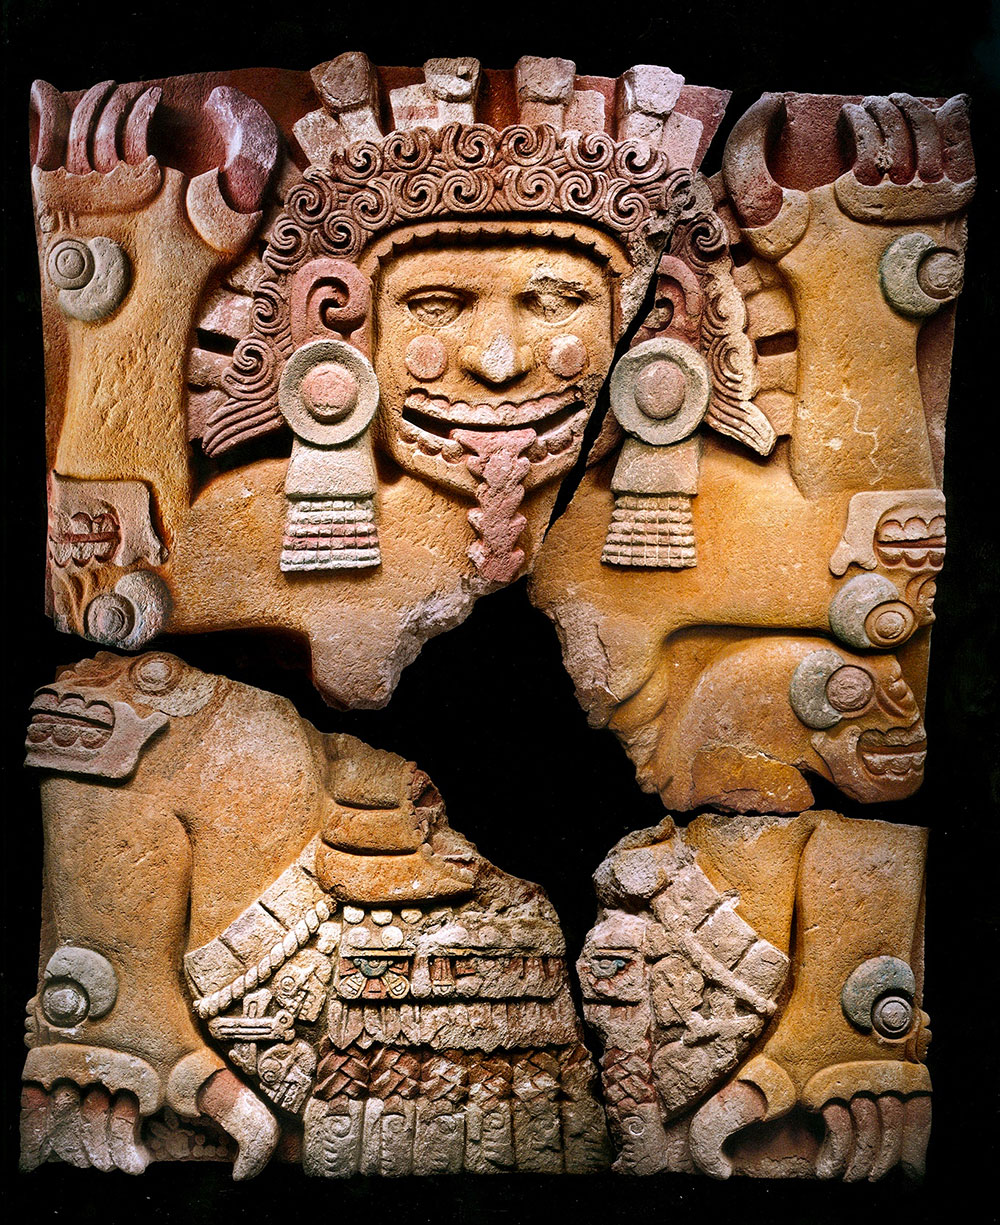 La diosa azteca Tlatecuhtli